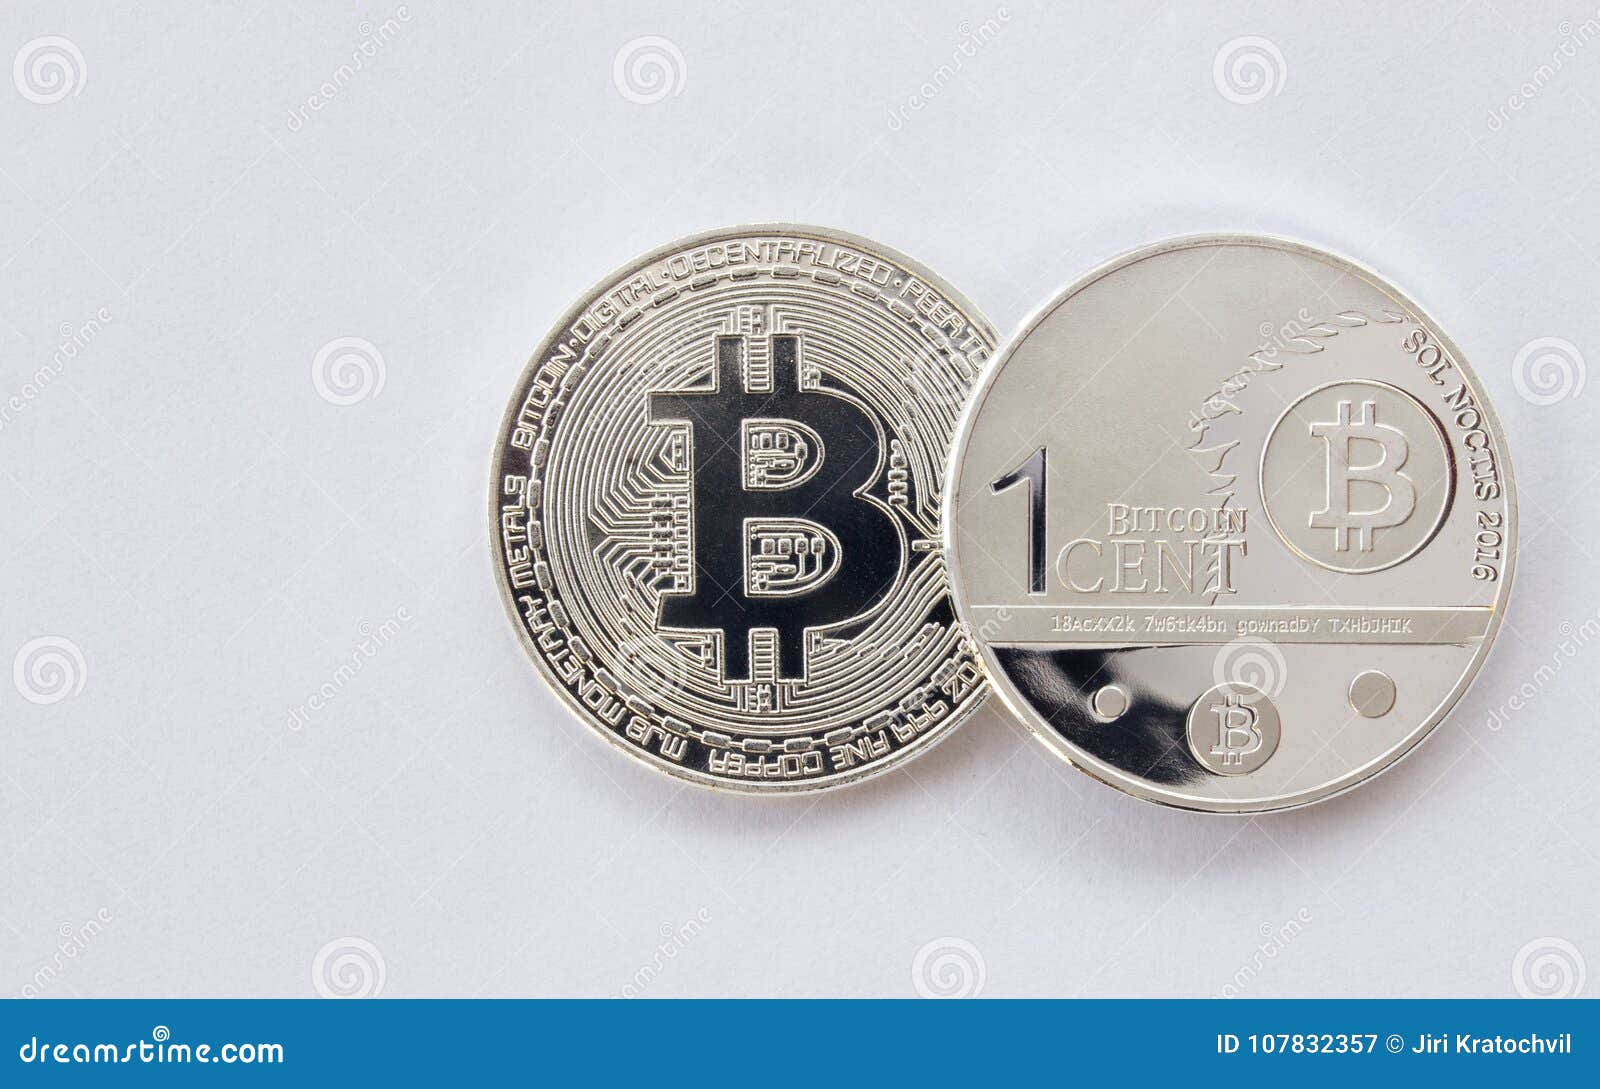 1 cent bitcoin